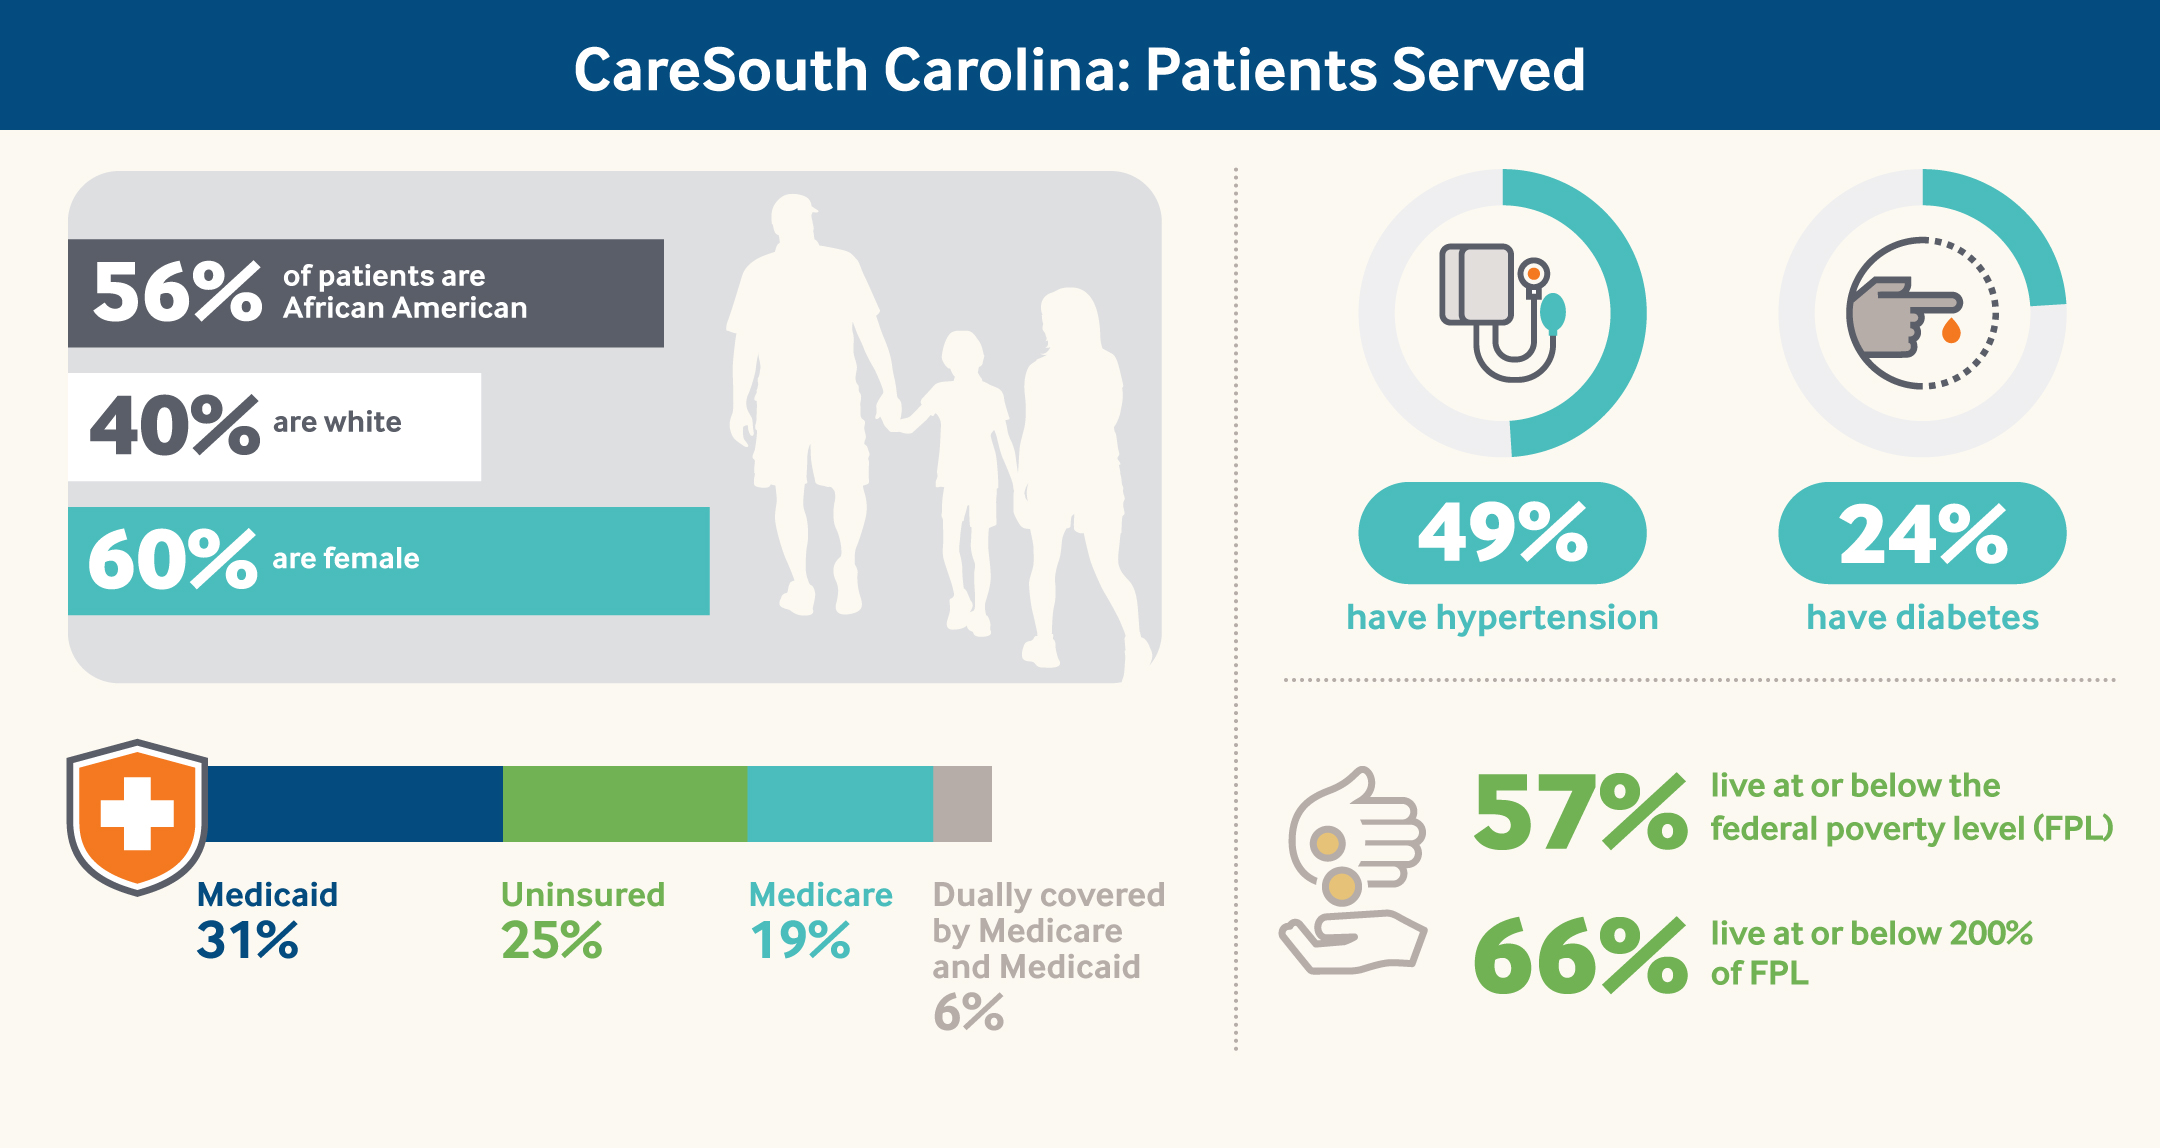 CareSouth Carolina: Patients Served